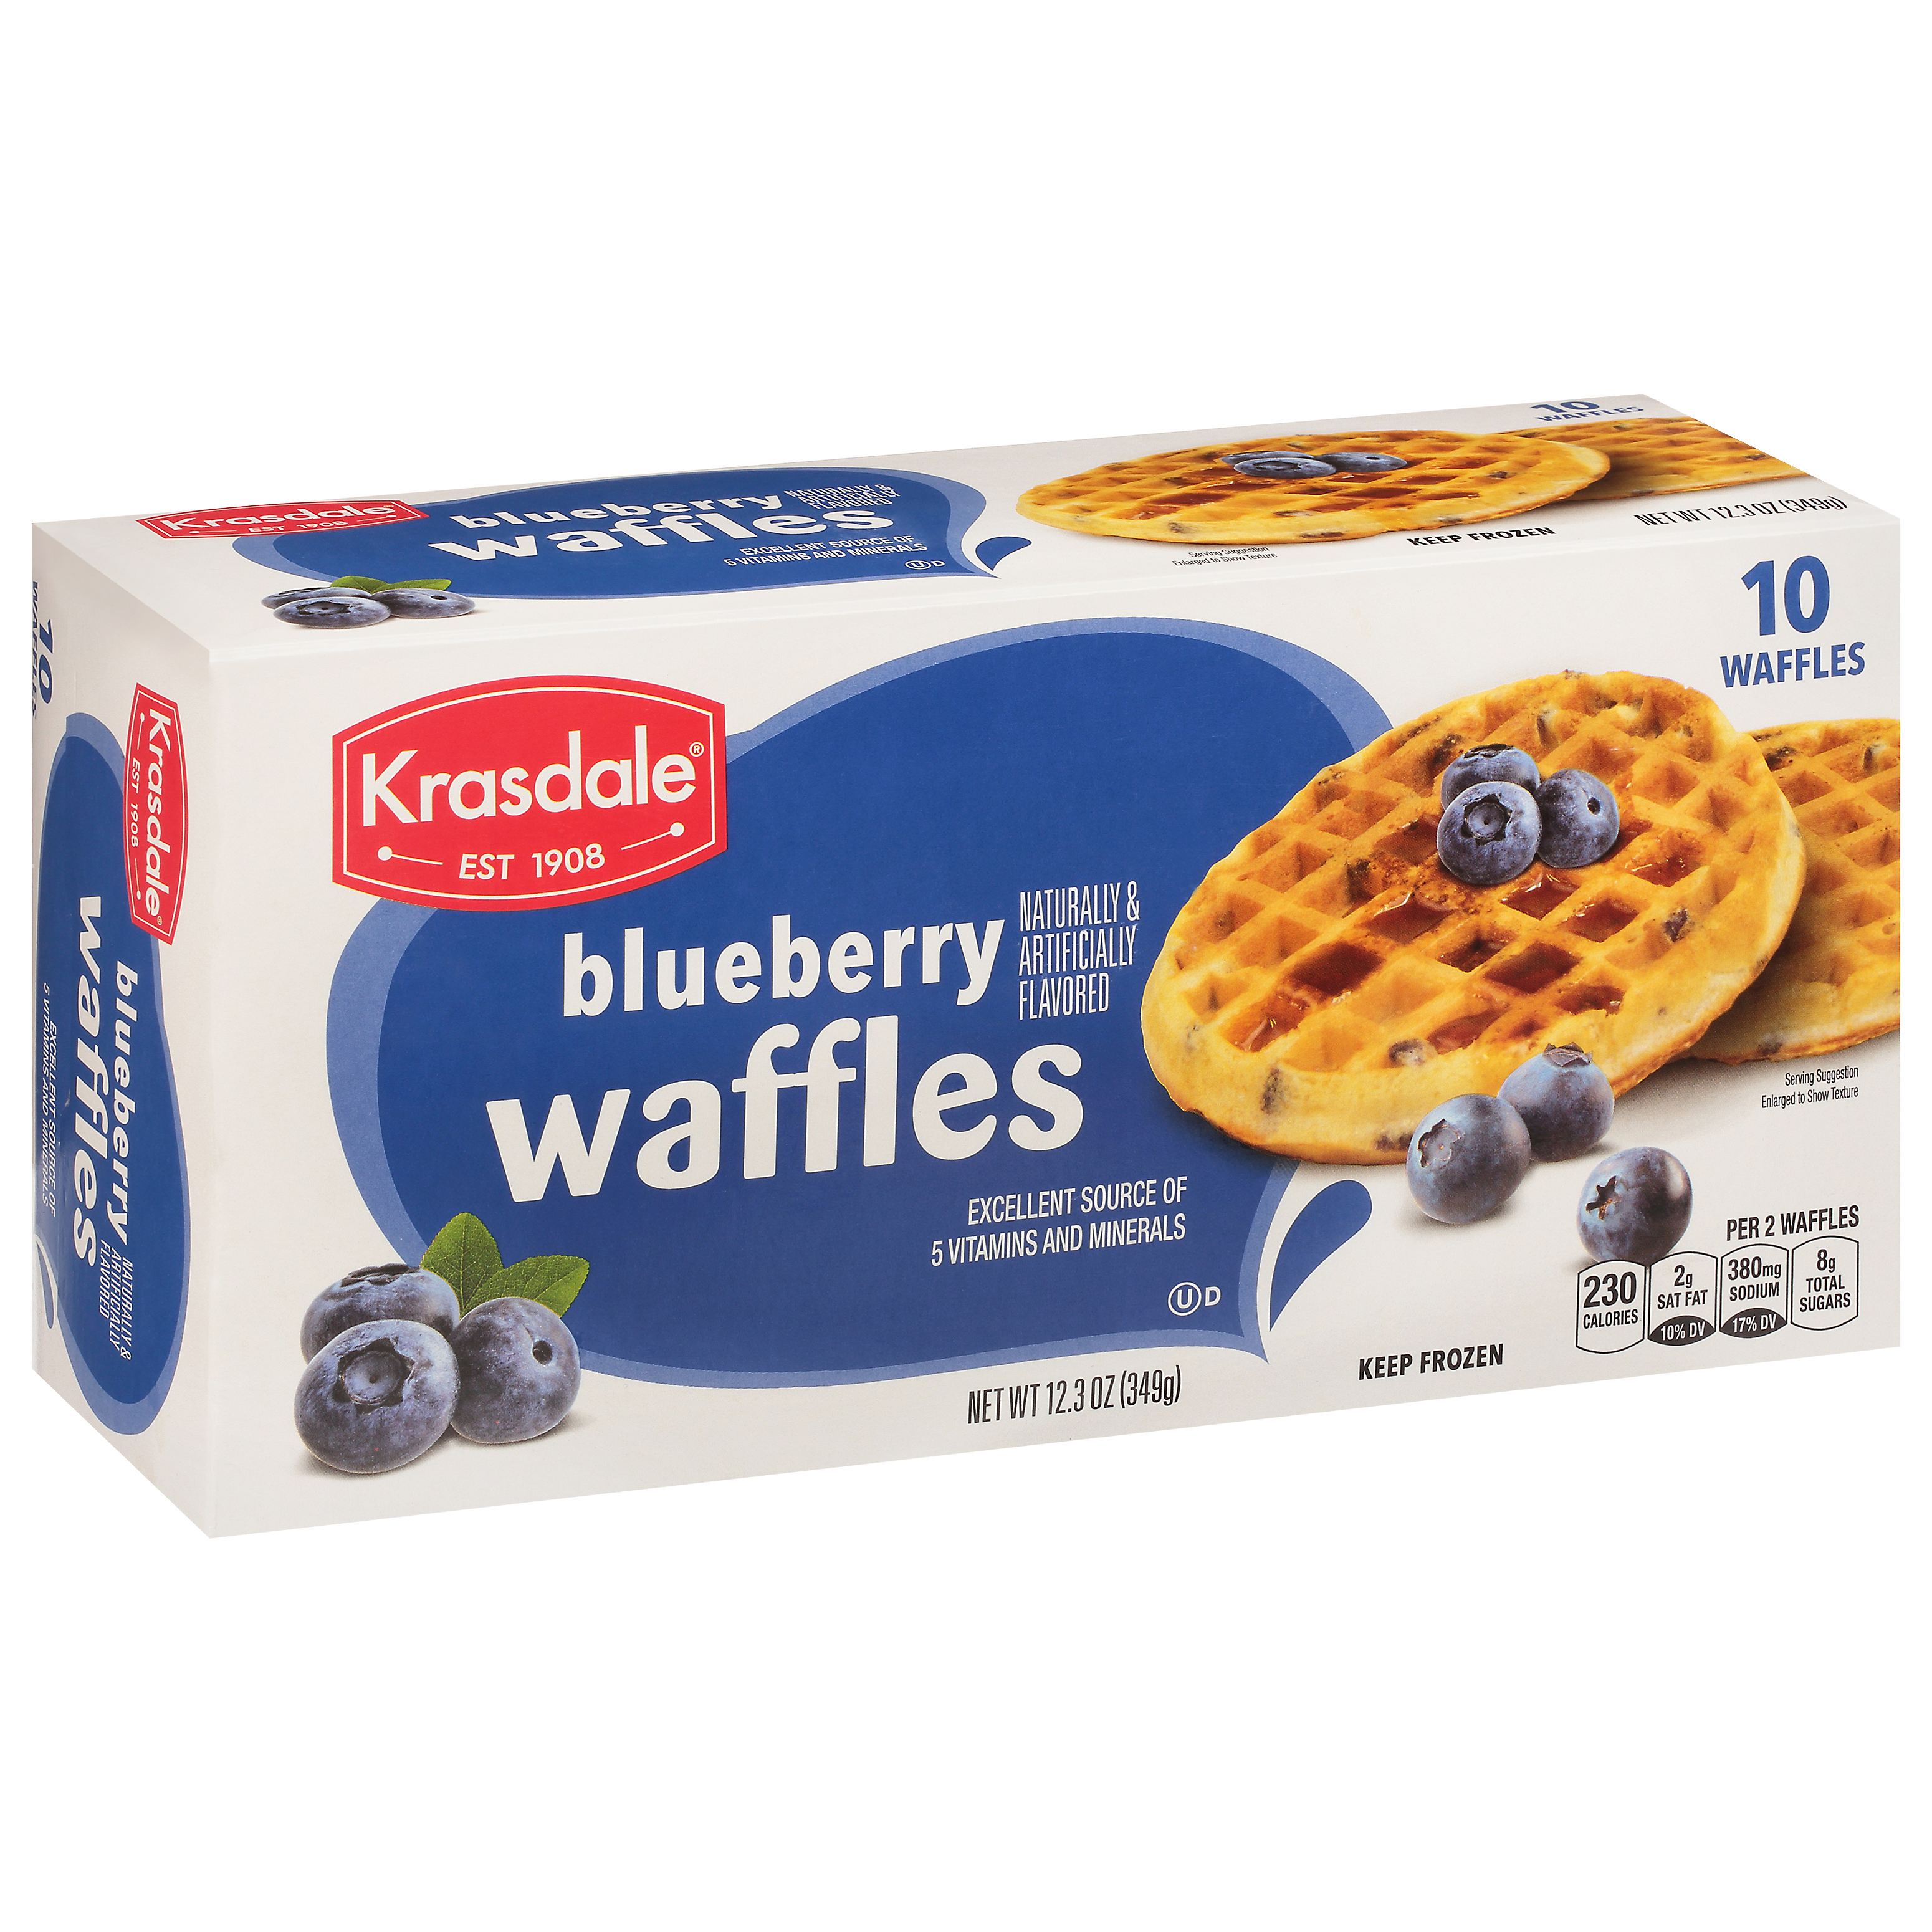 Krasdale Blueberry Waffles 10 Ea image